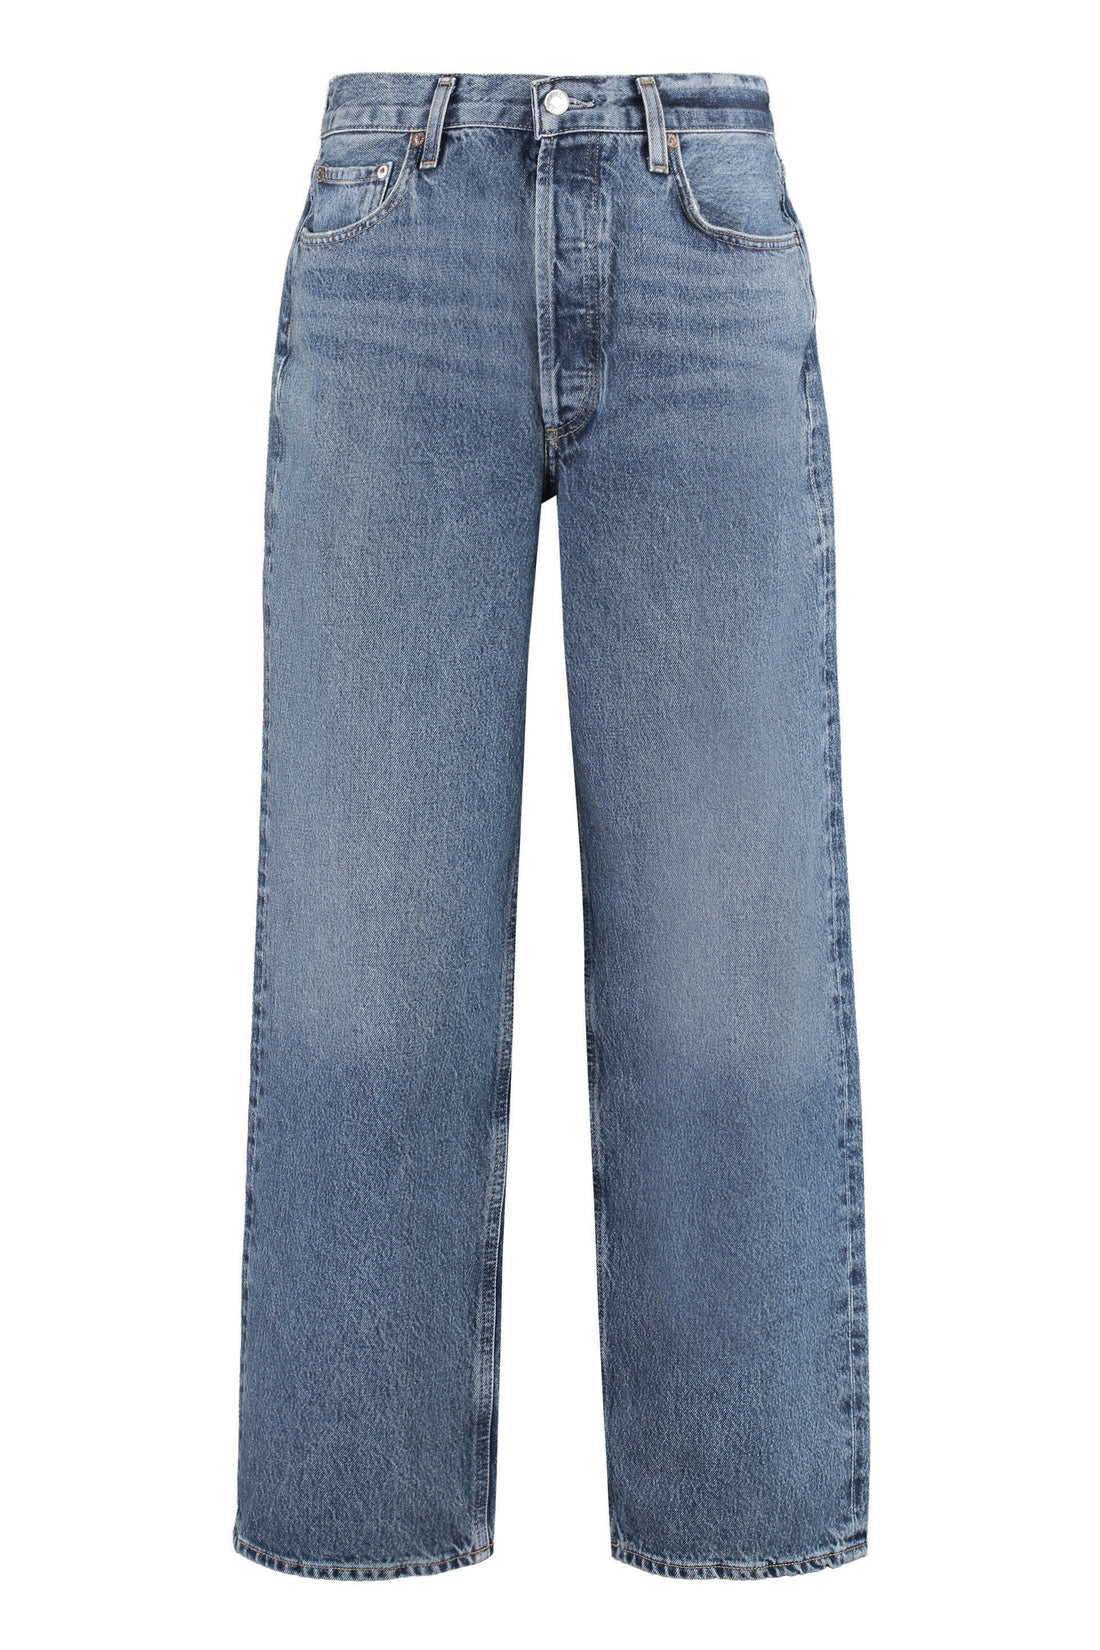 AGOLDE-OUTLET-SALE-Dara baggy jeans-ARCHIVIST